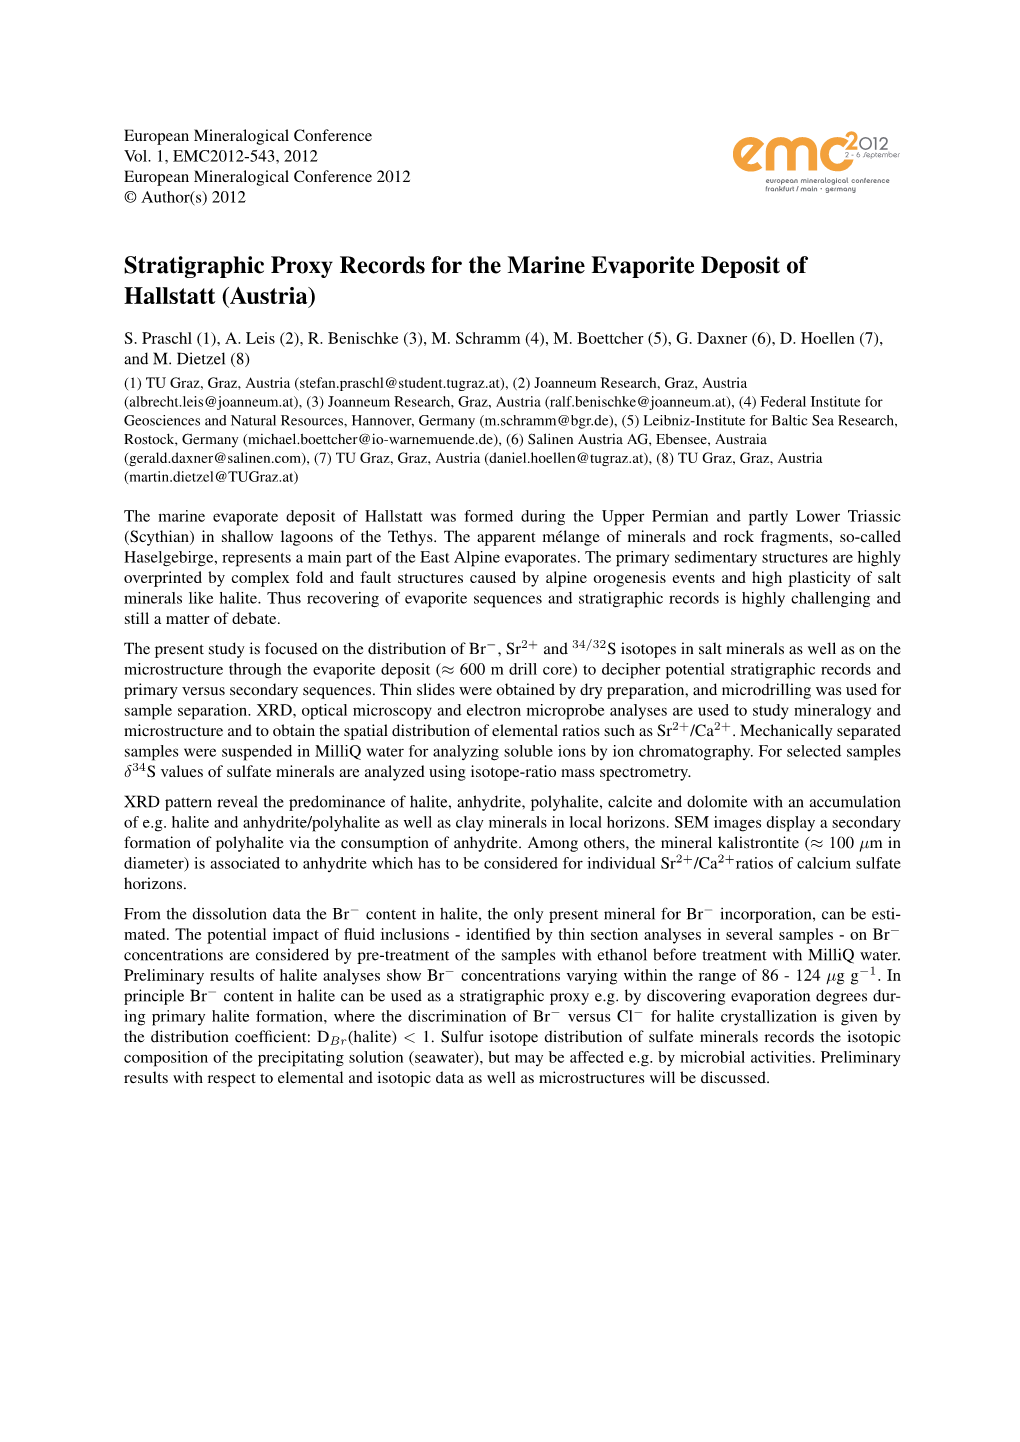 Stratigraphic Proxy Records for the Marine Evaporite Deposit of Hallstatt (Austria)